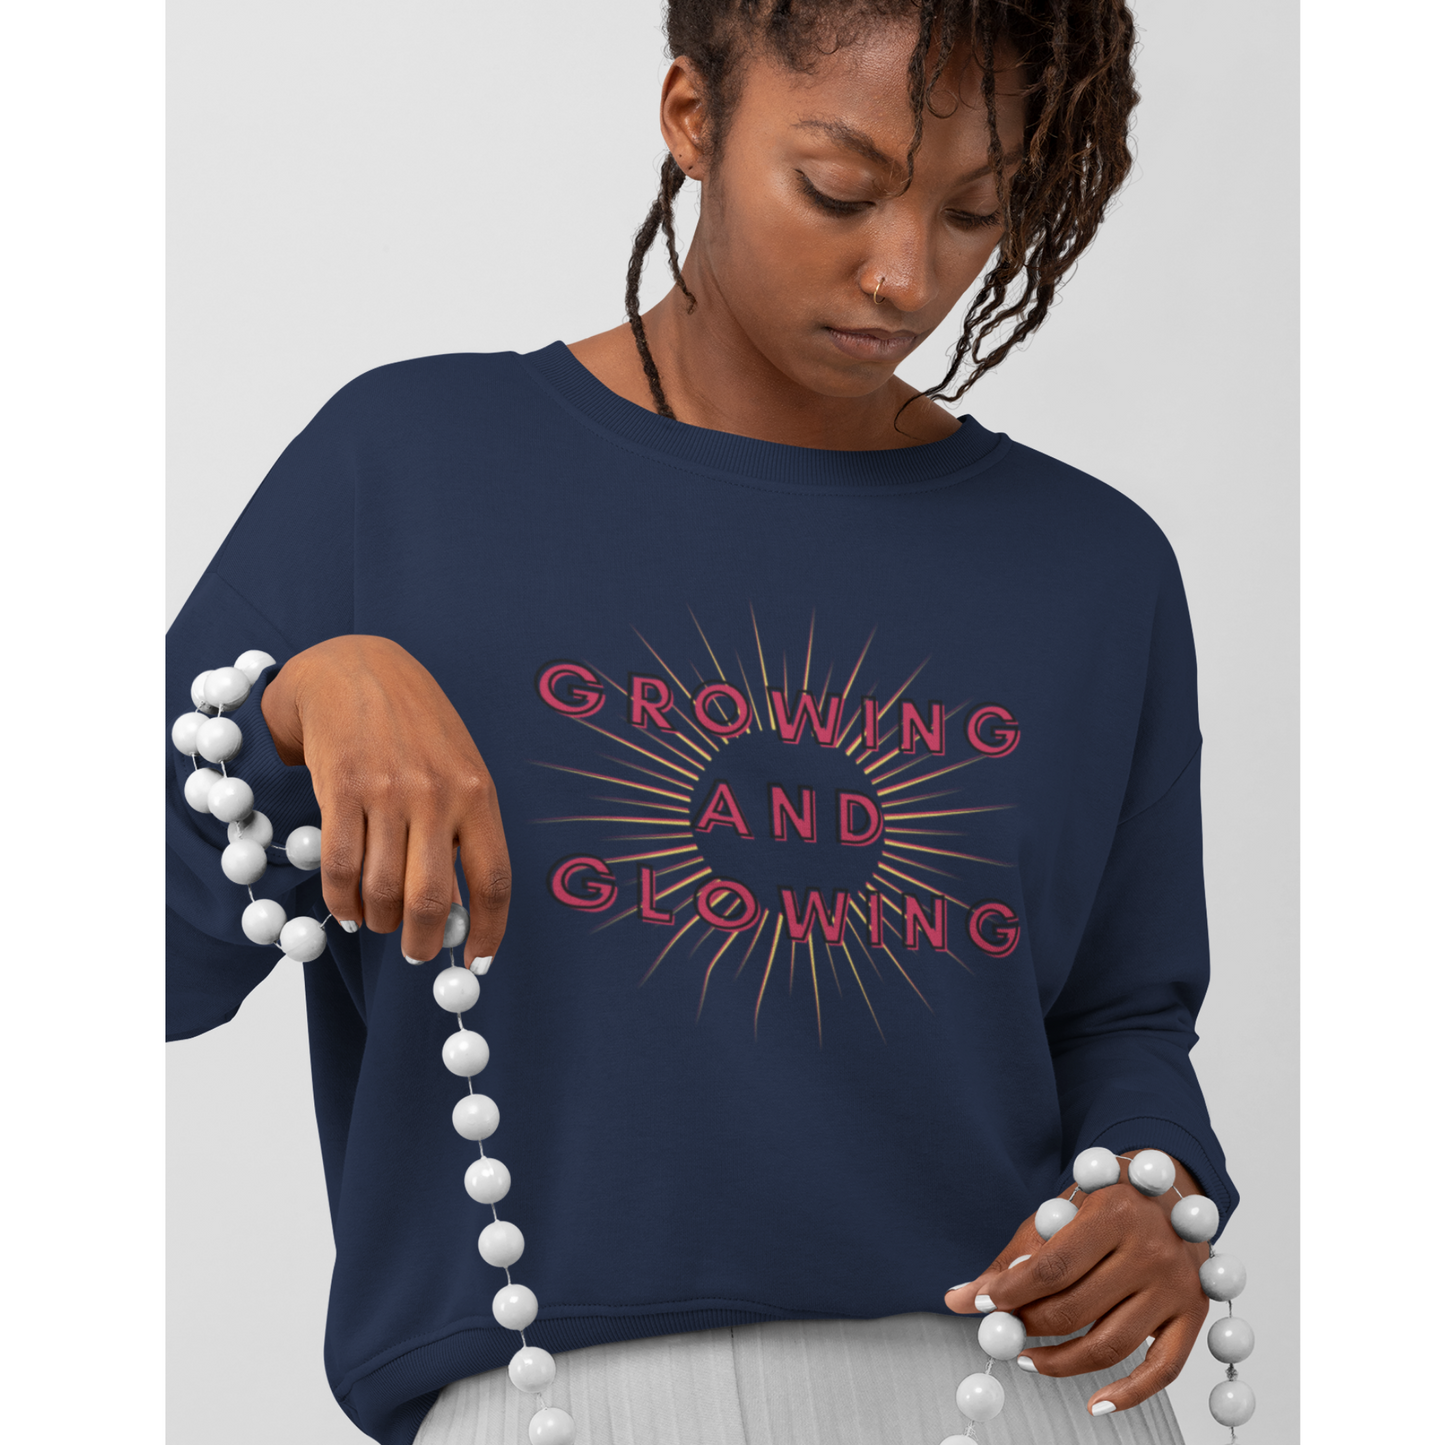 Growing & Glowing Sweatshirt, Women's Empowerment Sweatshirt, Christian Sweatshirt, Faith Apparel, Faith-Based Apparel, Christian Apparel